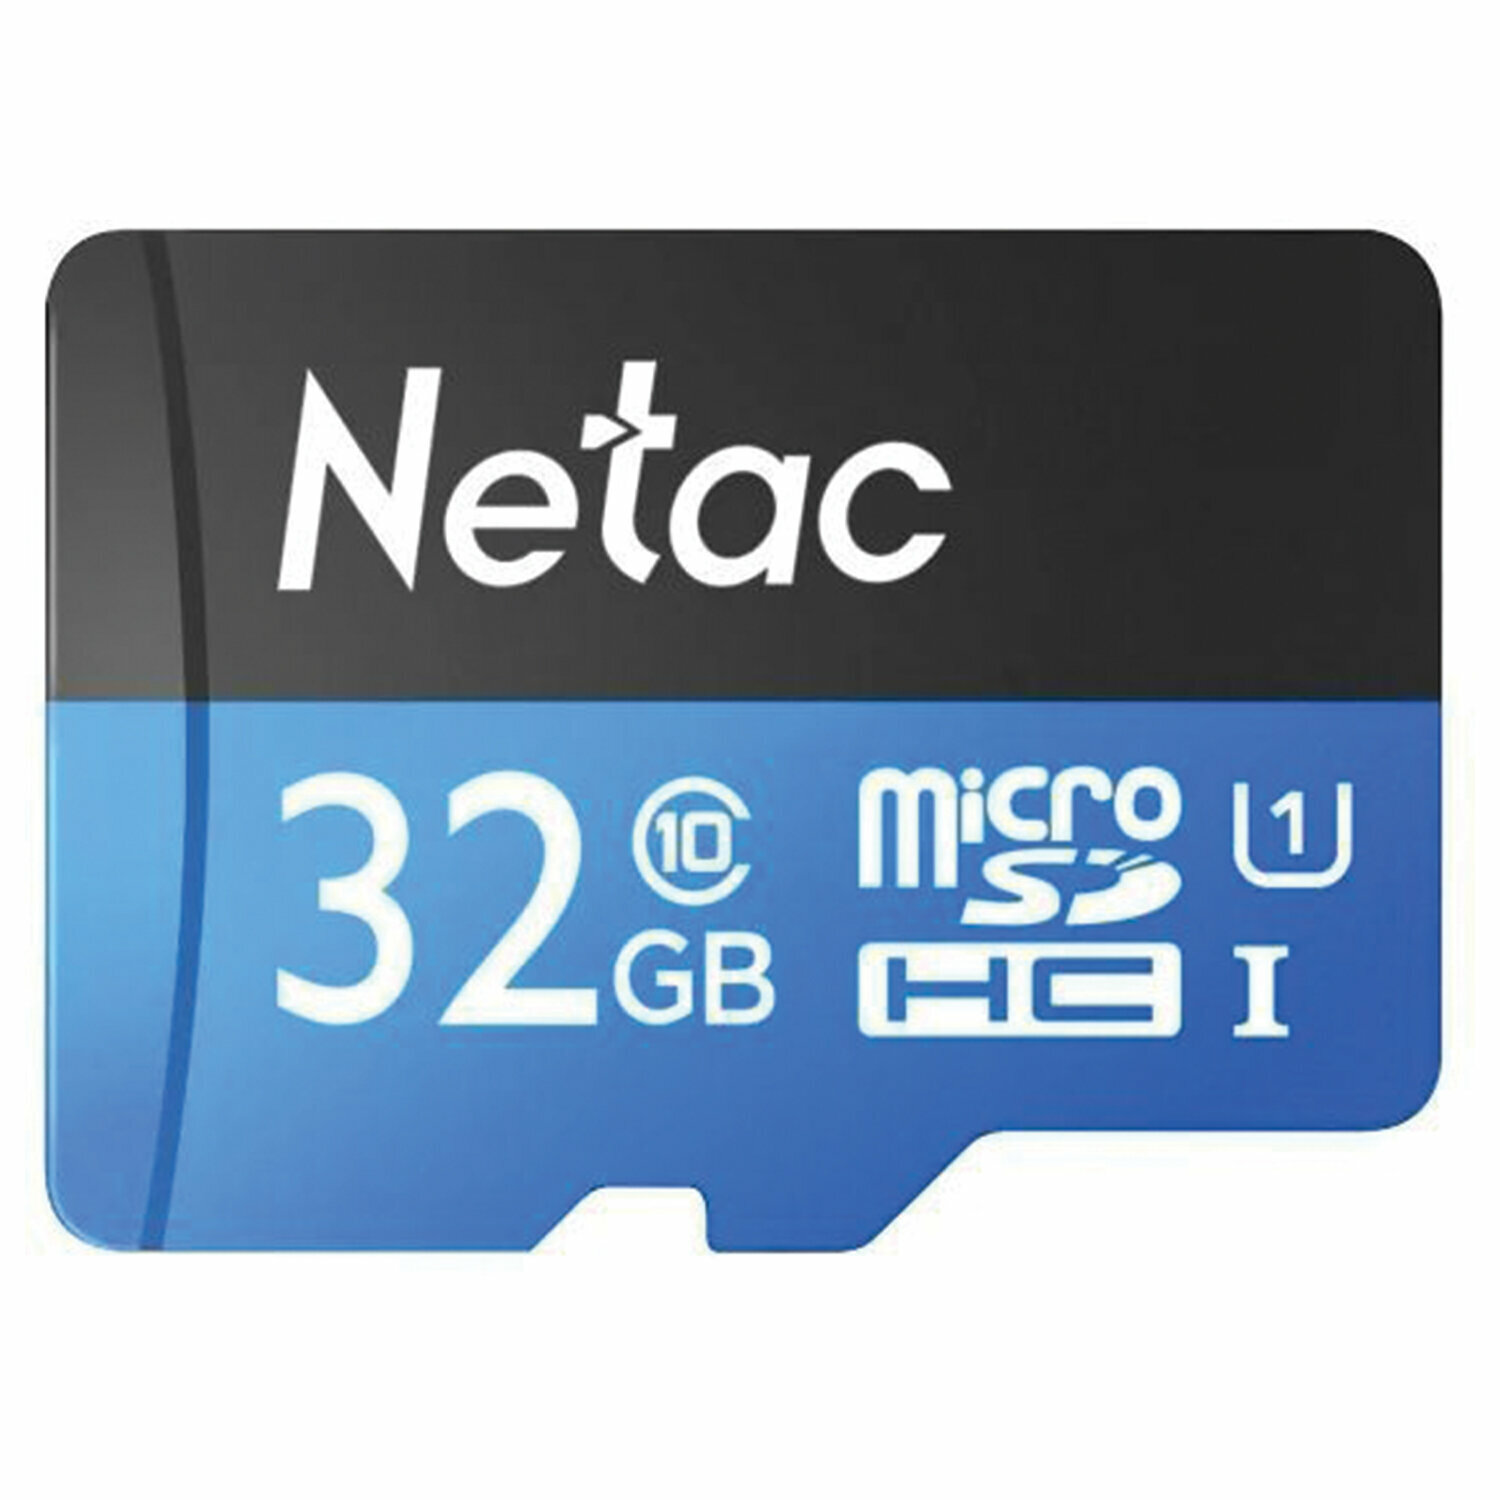 Карта памяти microSDHC 32 ГБ NETAC P500 Standard, UHS-I U1, 80 Мб/с (class 10), адаптер, NT02P500STN-032G-R 2 шт .